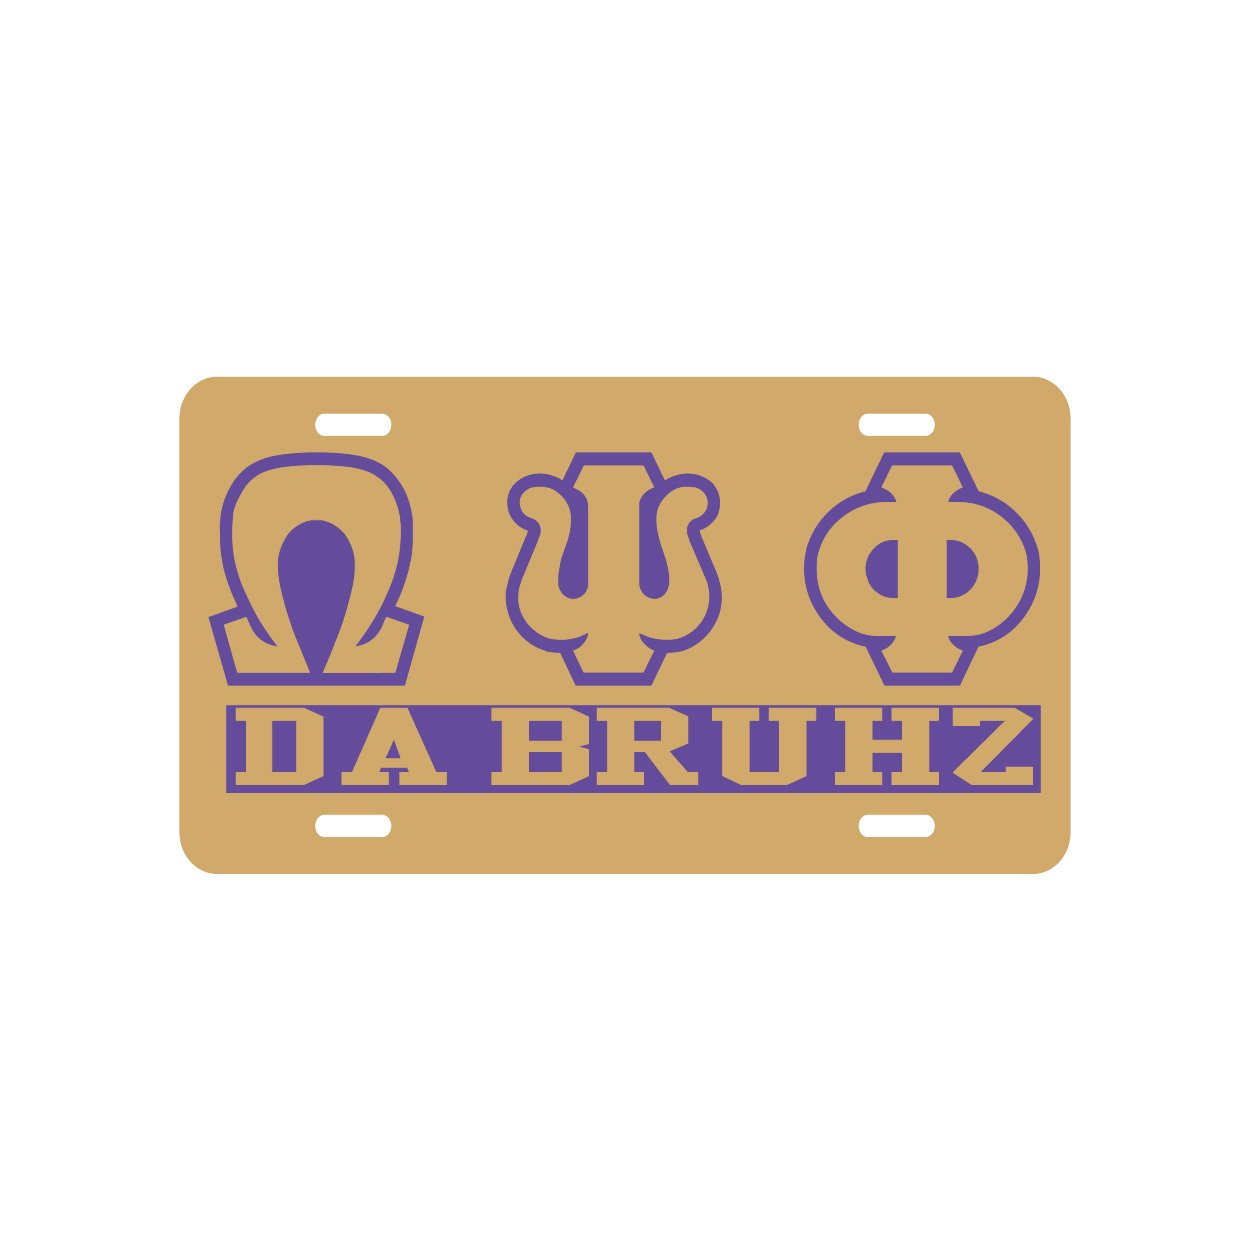 Omega Da Bruhz License Plate (Purple on Gold) - GreekStuff